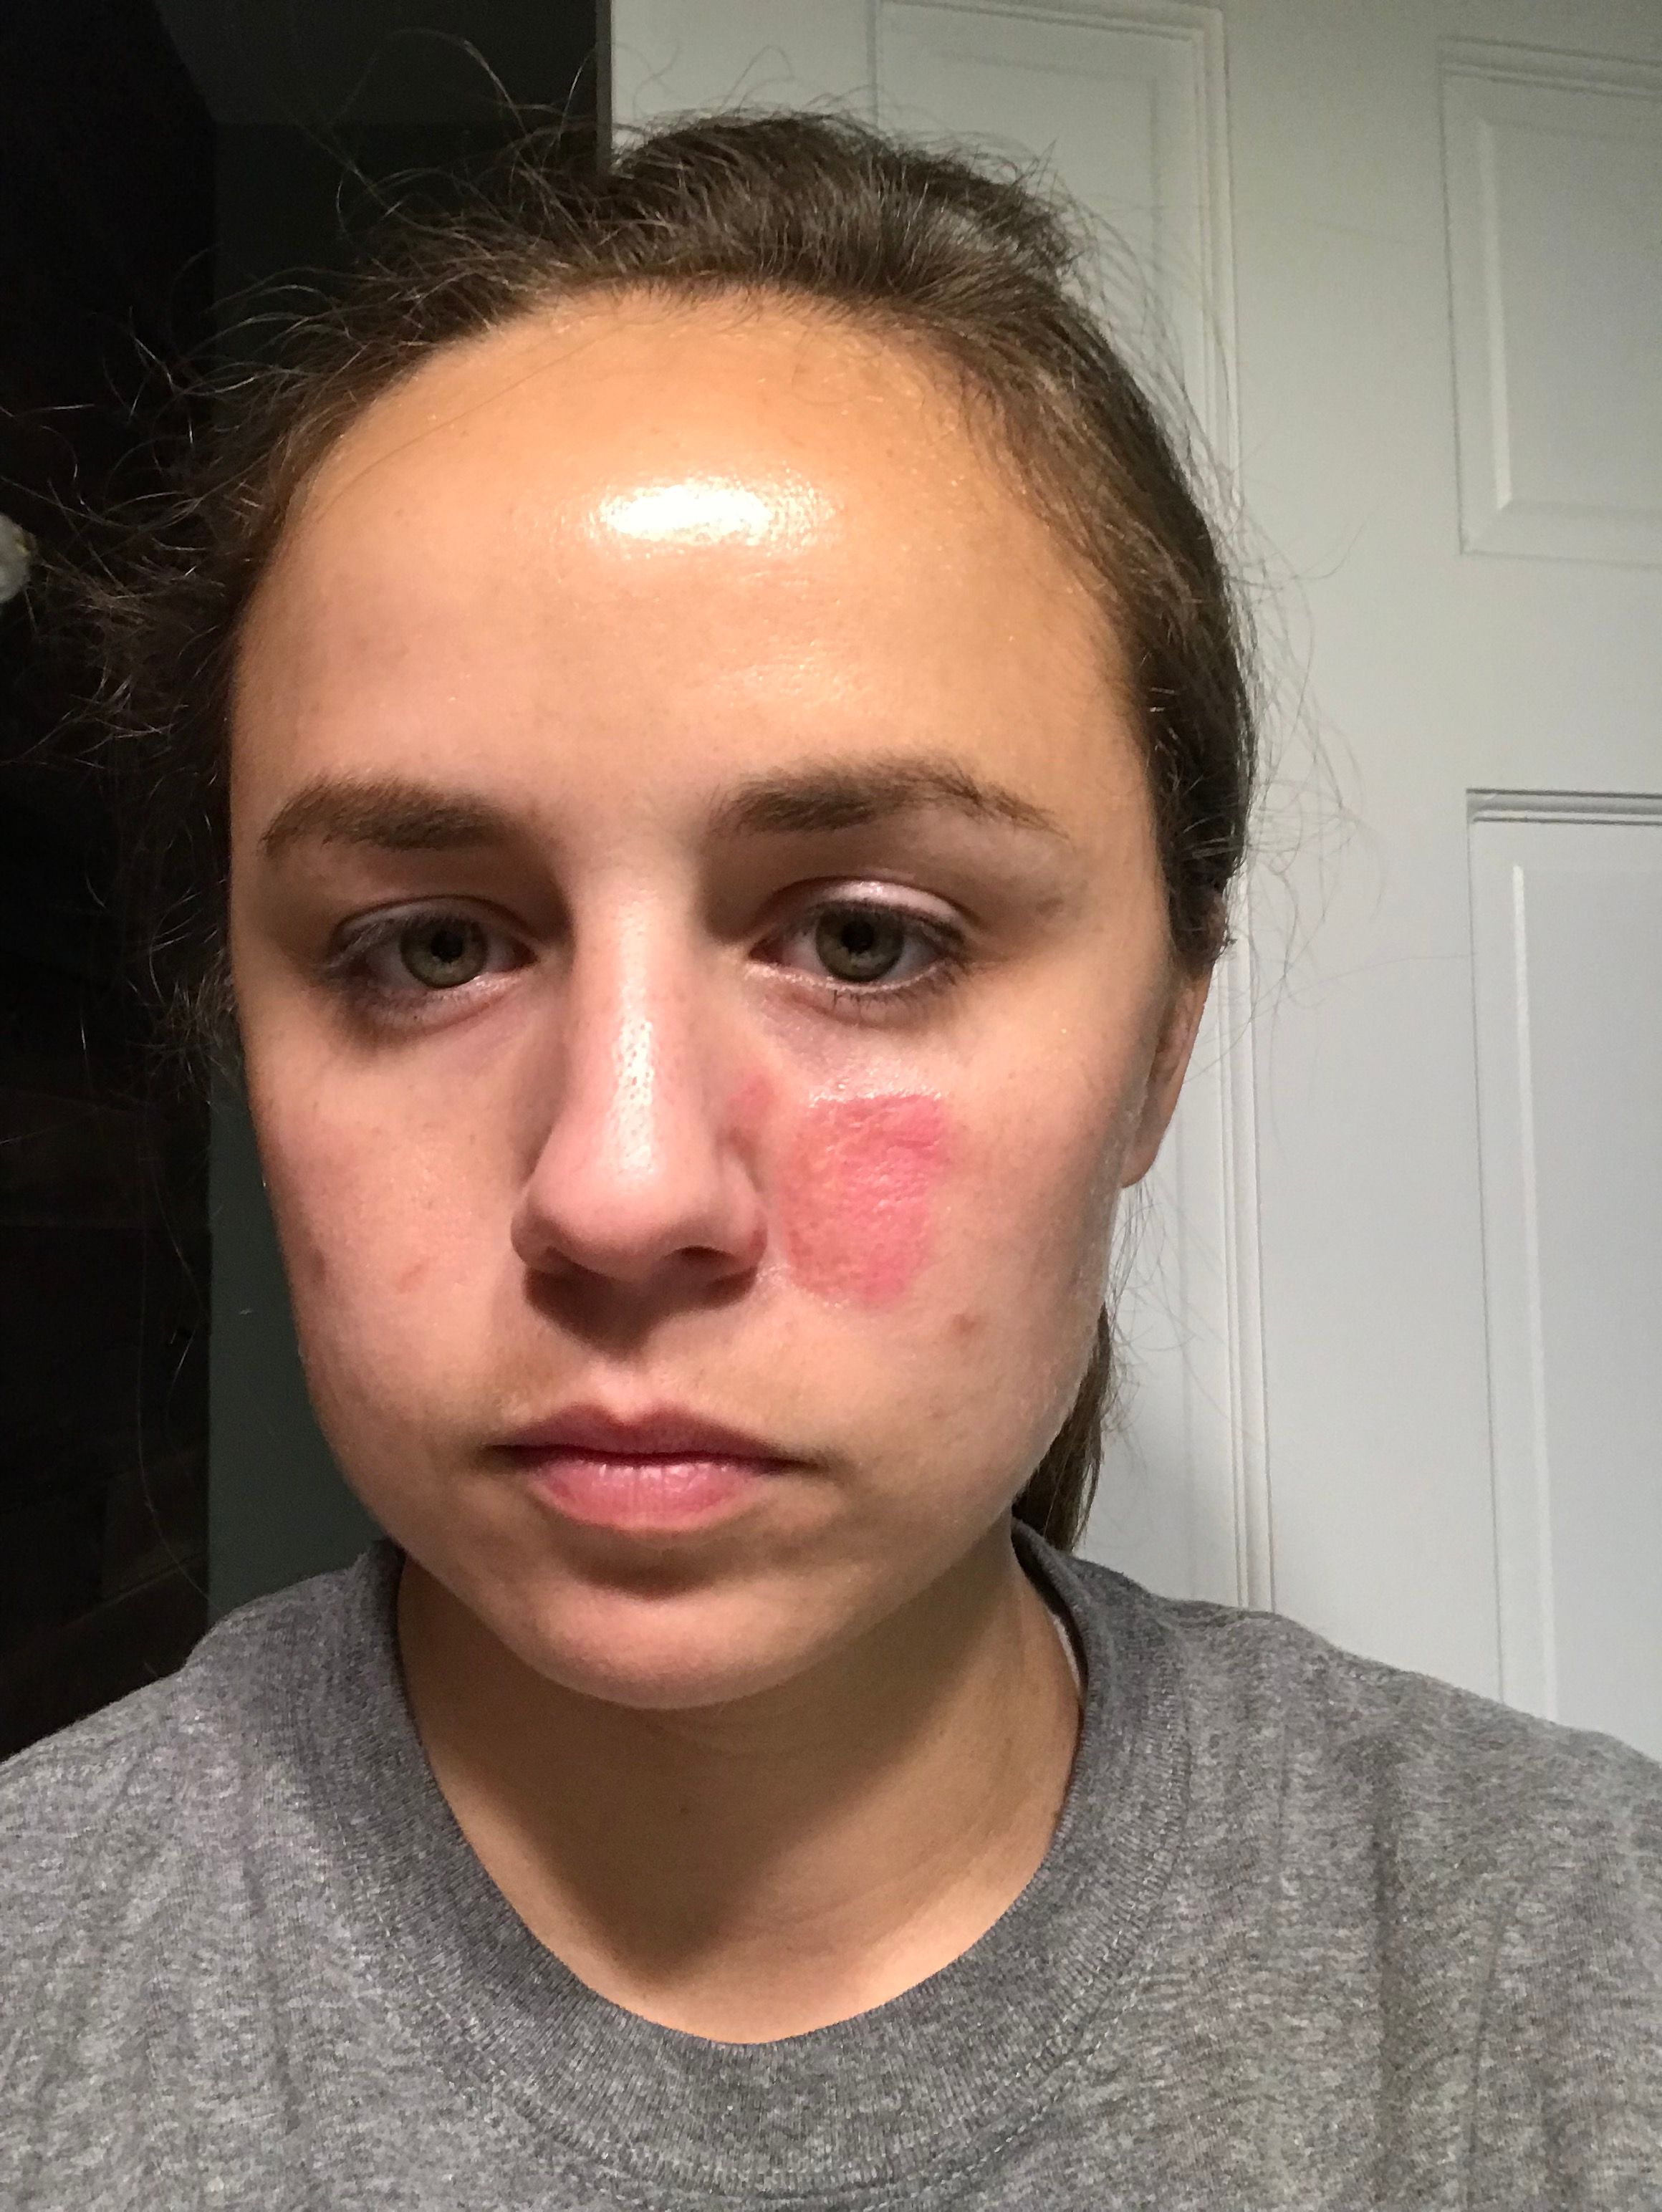 Facial Burn Scar - Beauty Insider Community